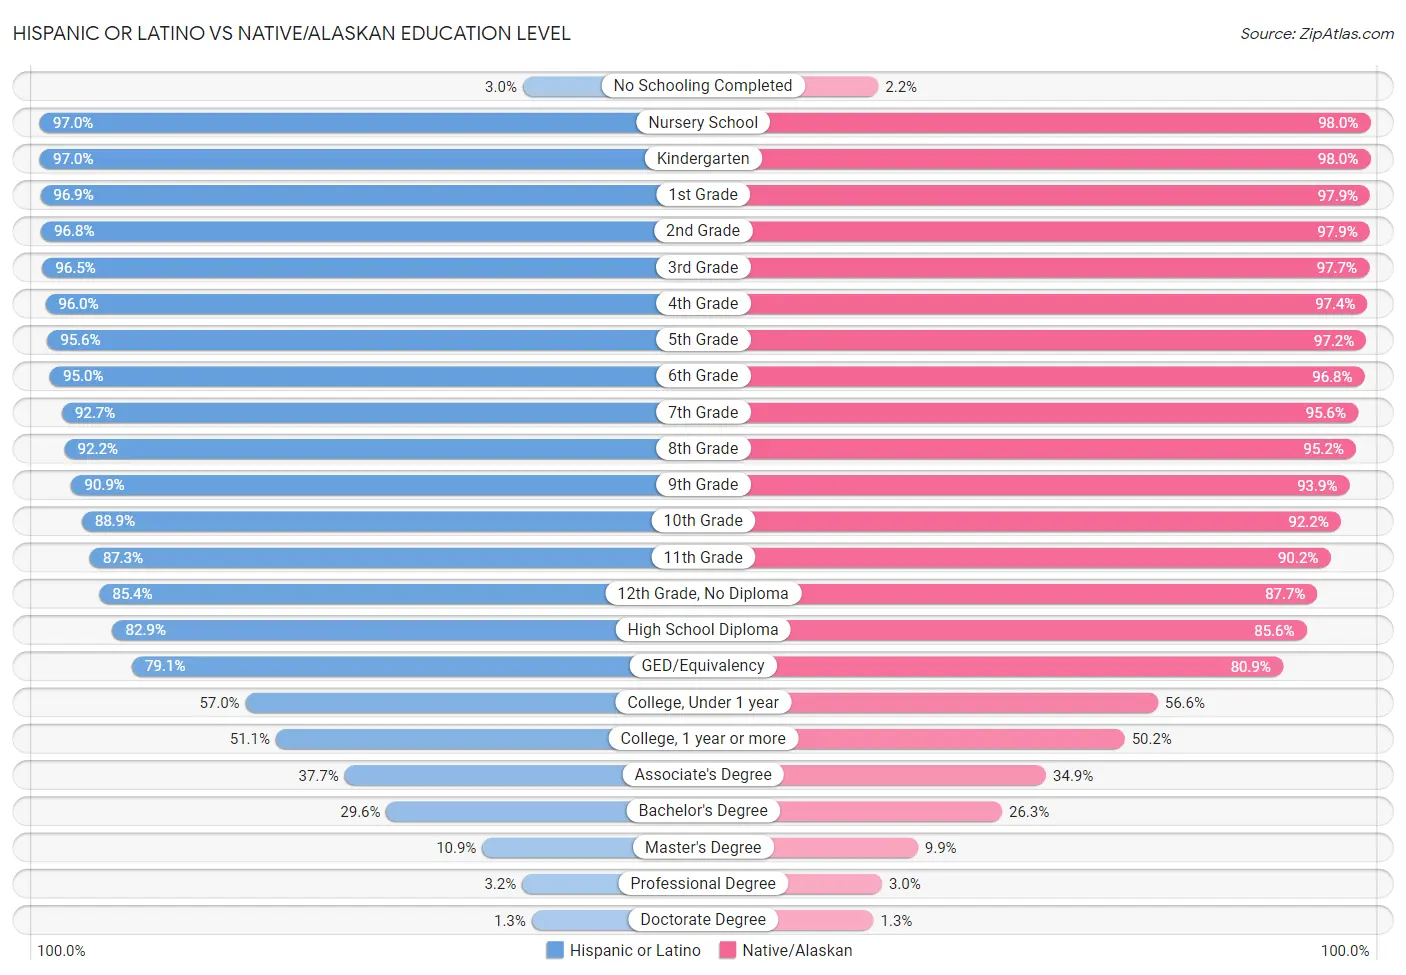 Hispanic or Latino vs Native/Alaskan Education Level